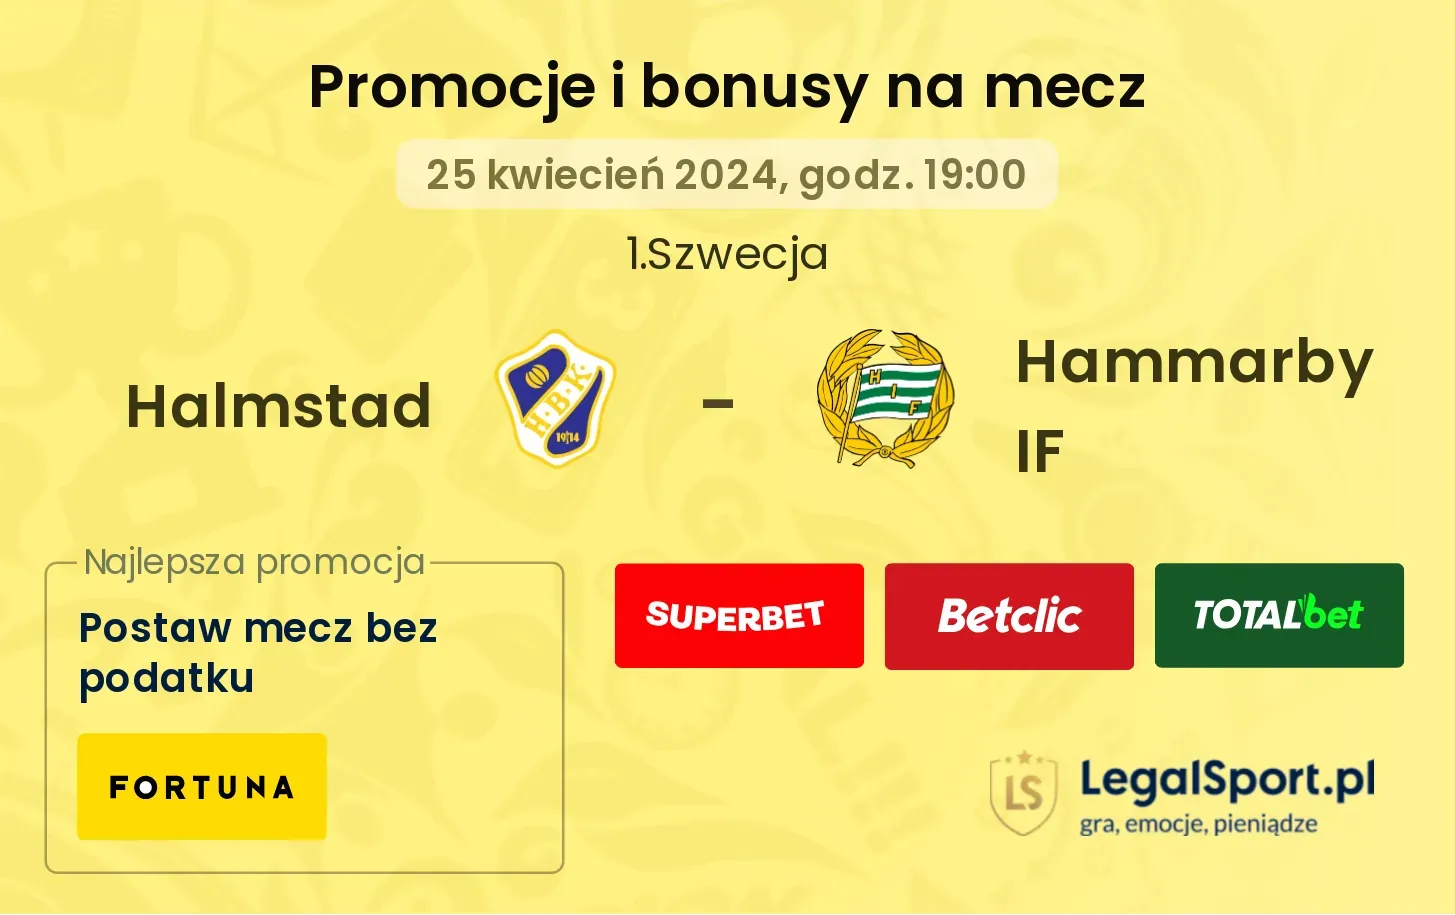 Halmstad - Hammarby IF promocje bonusy na mecz